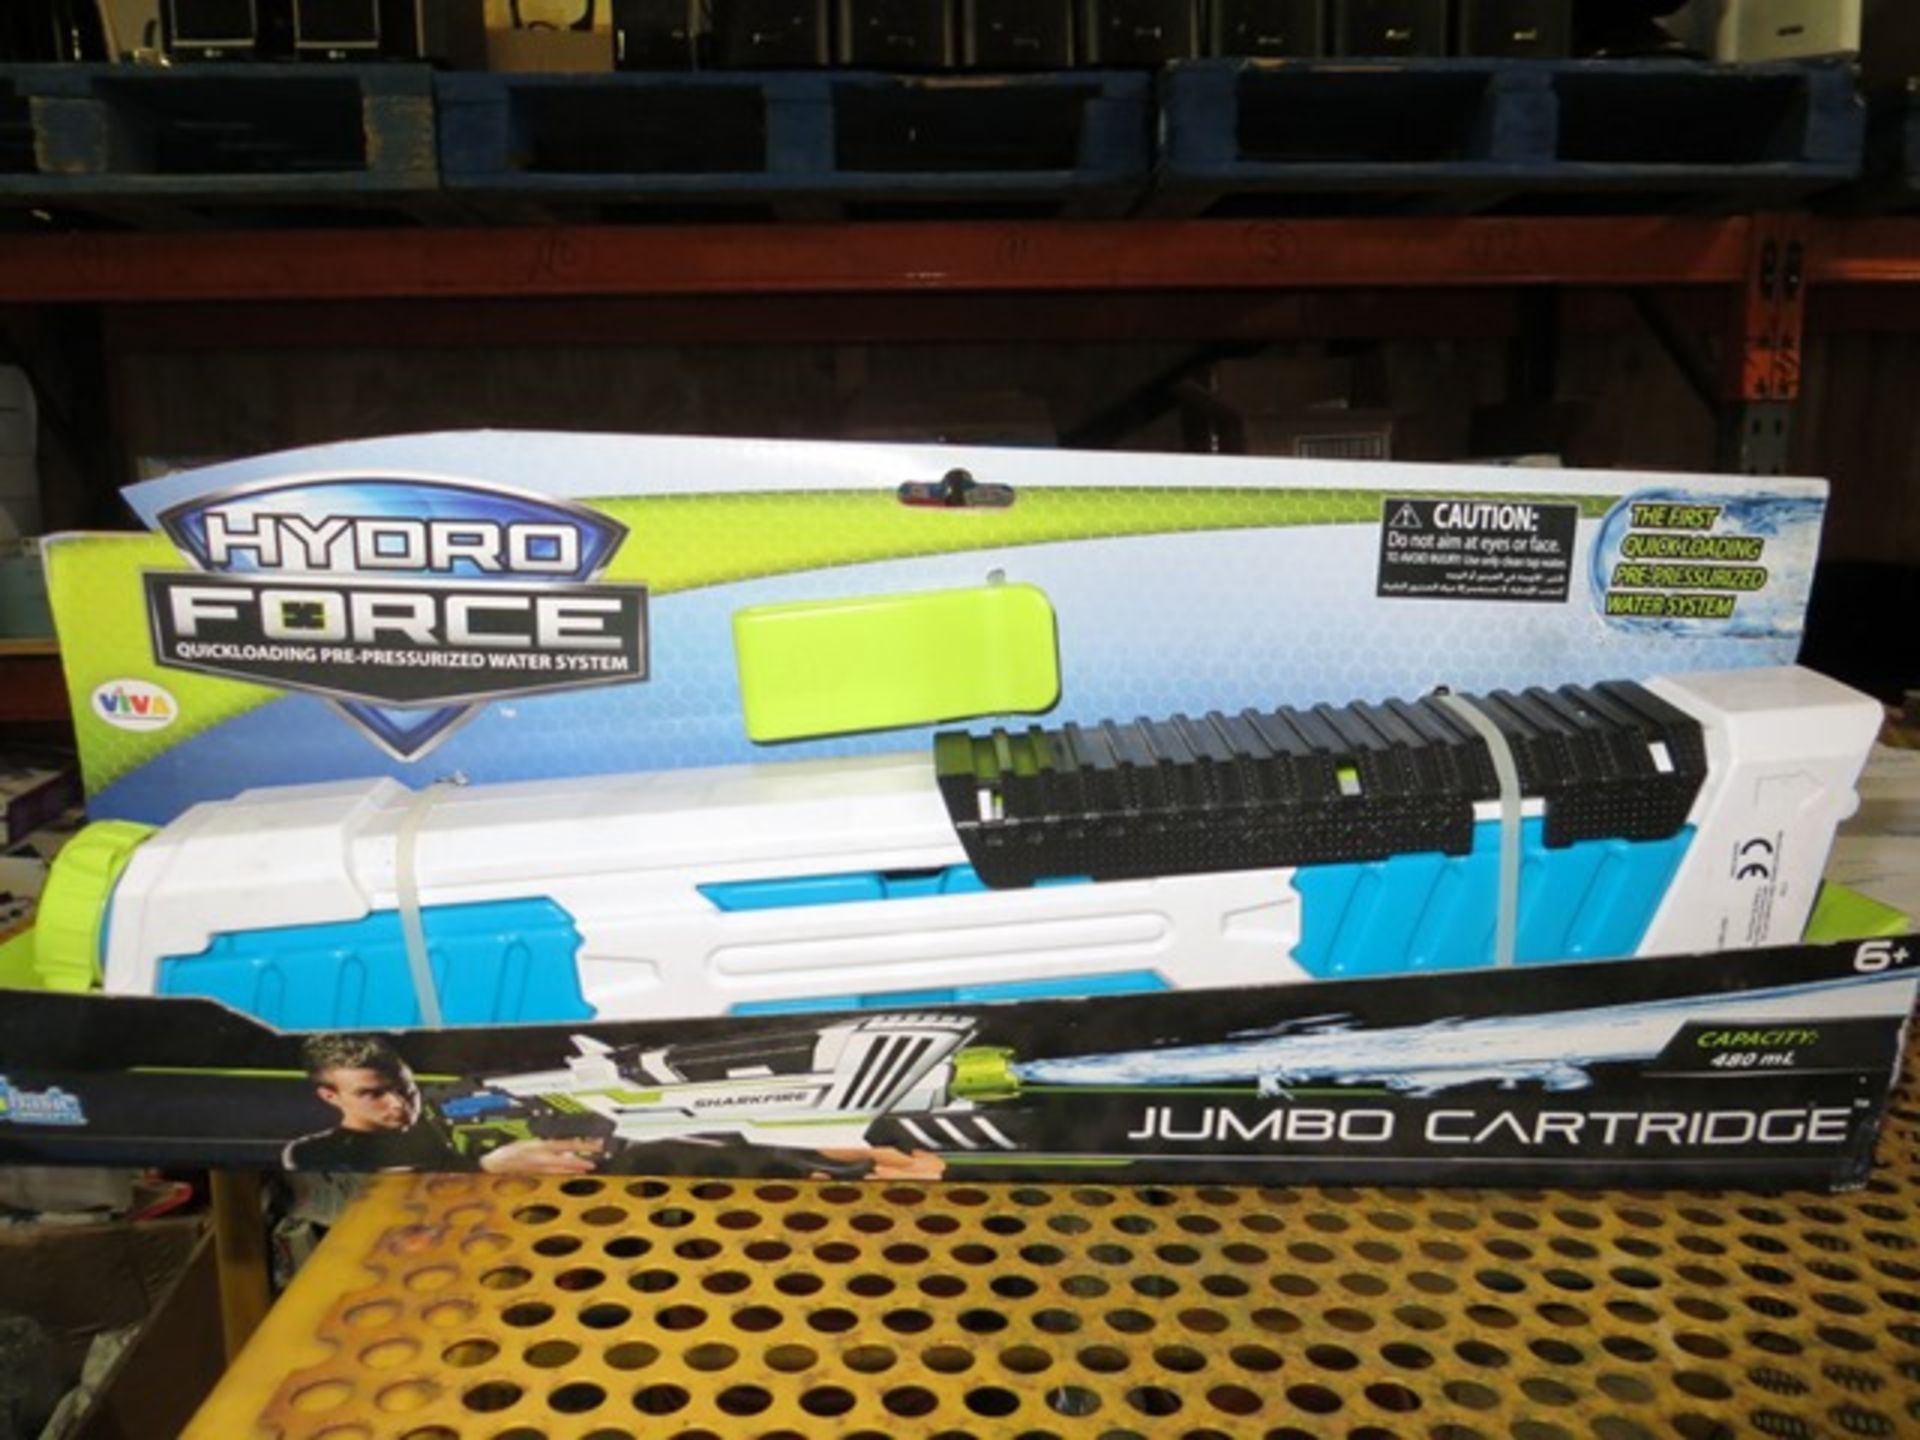 Sixteen Boxes 6 per box (96 units) of Hydro Force Jumbo Water Gun Cartridges 480ml CapacityPlease